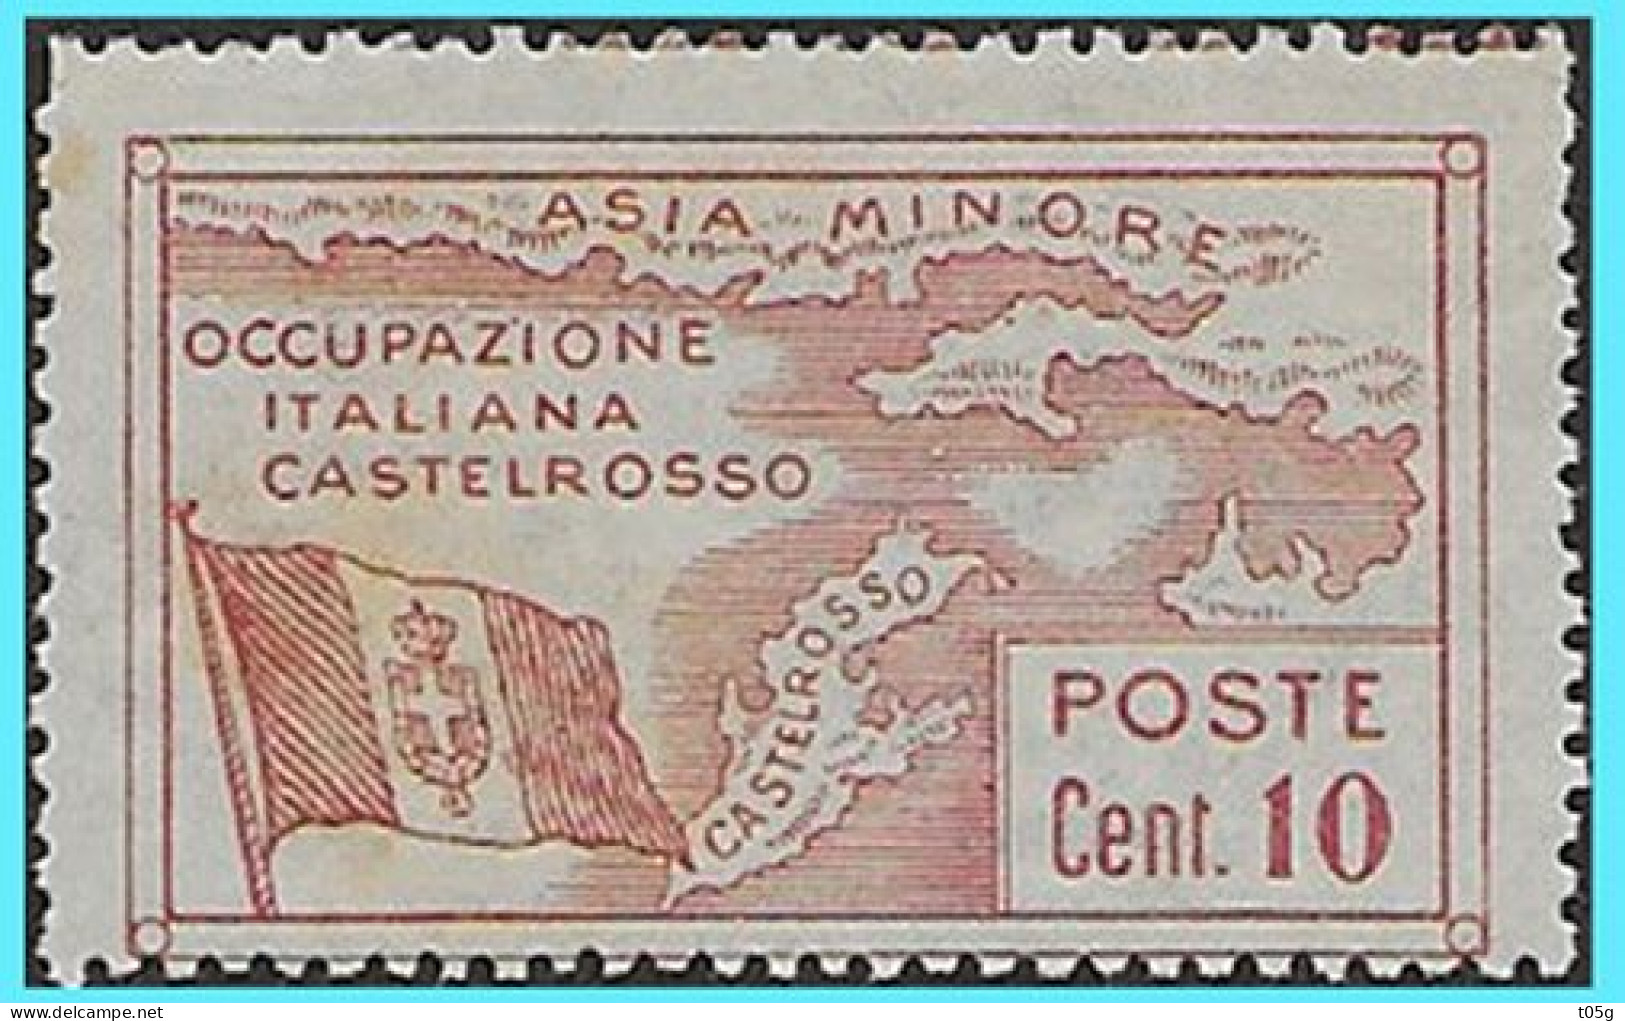 CASTELLORIZO- GREECE- GRECE - HELLAS- ITALY 1923: 10cent  Italian Post Office - From Set MNH** - Dodecanese